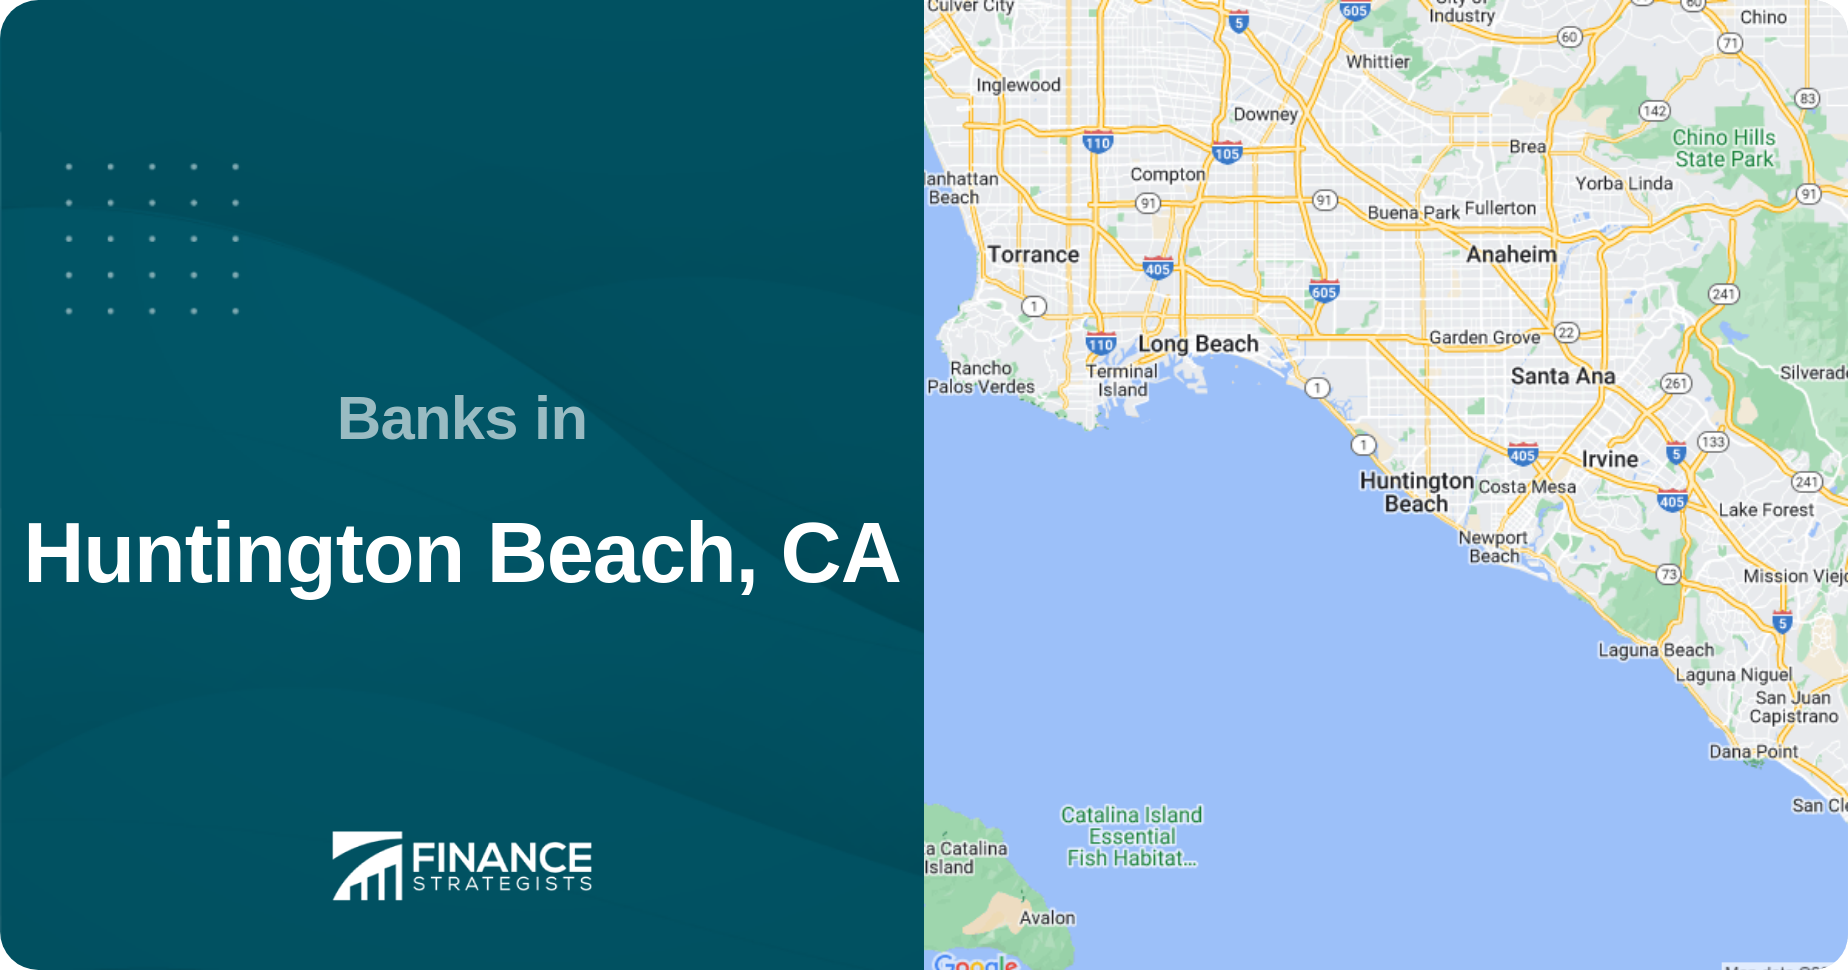 Banks in Huntington Beach, CA